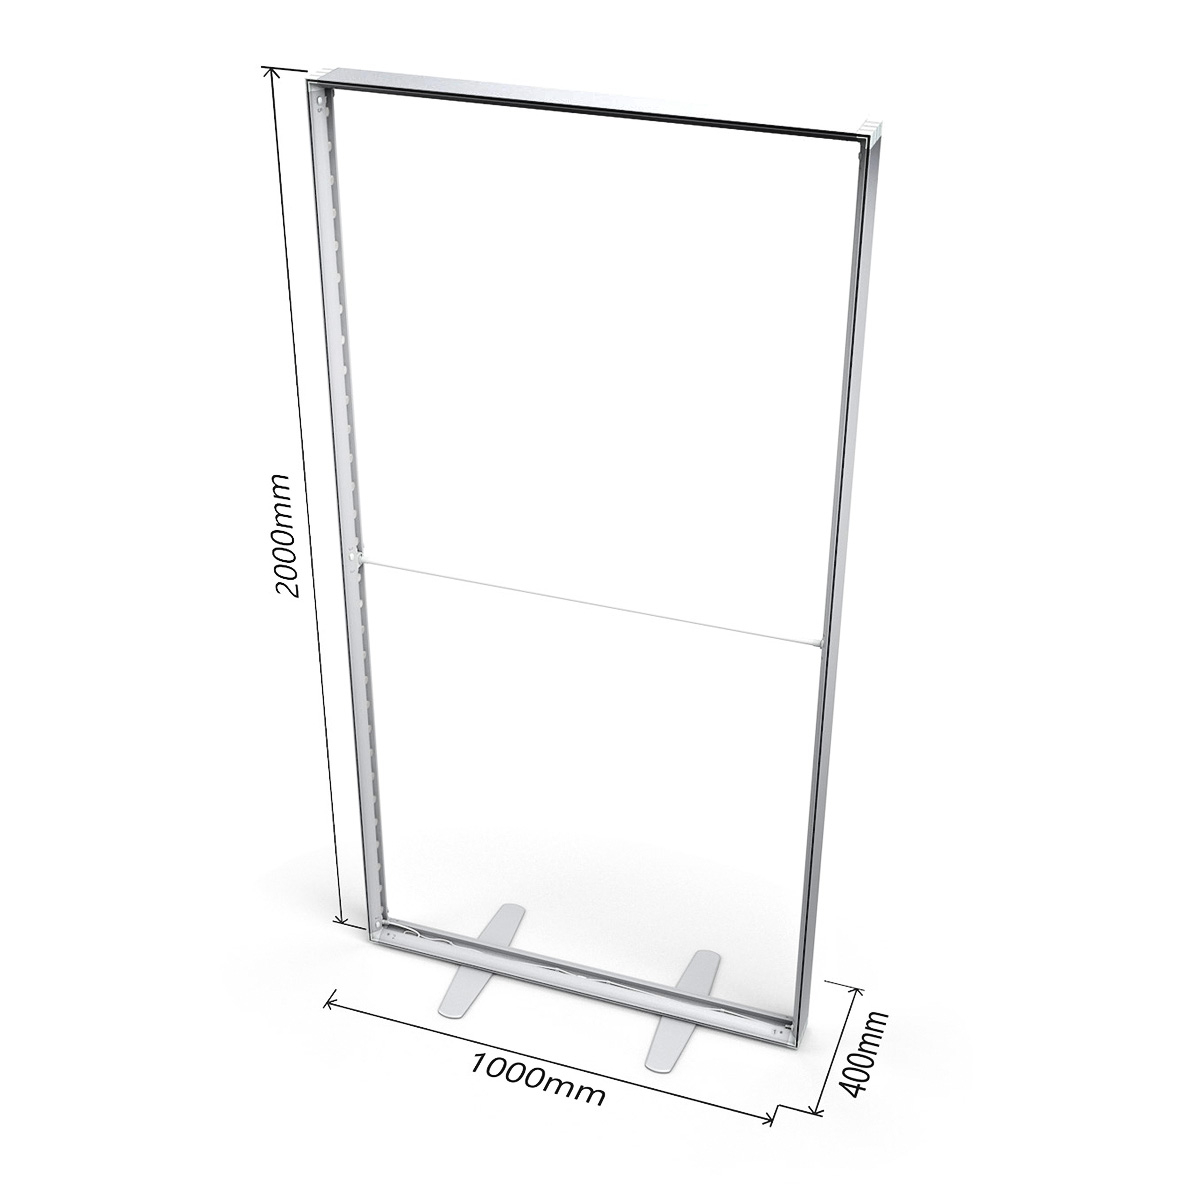 Dimensions of PIZAZZ® Freestanding LED Lightbox Frame 